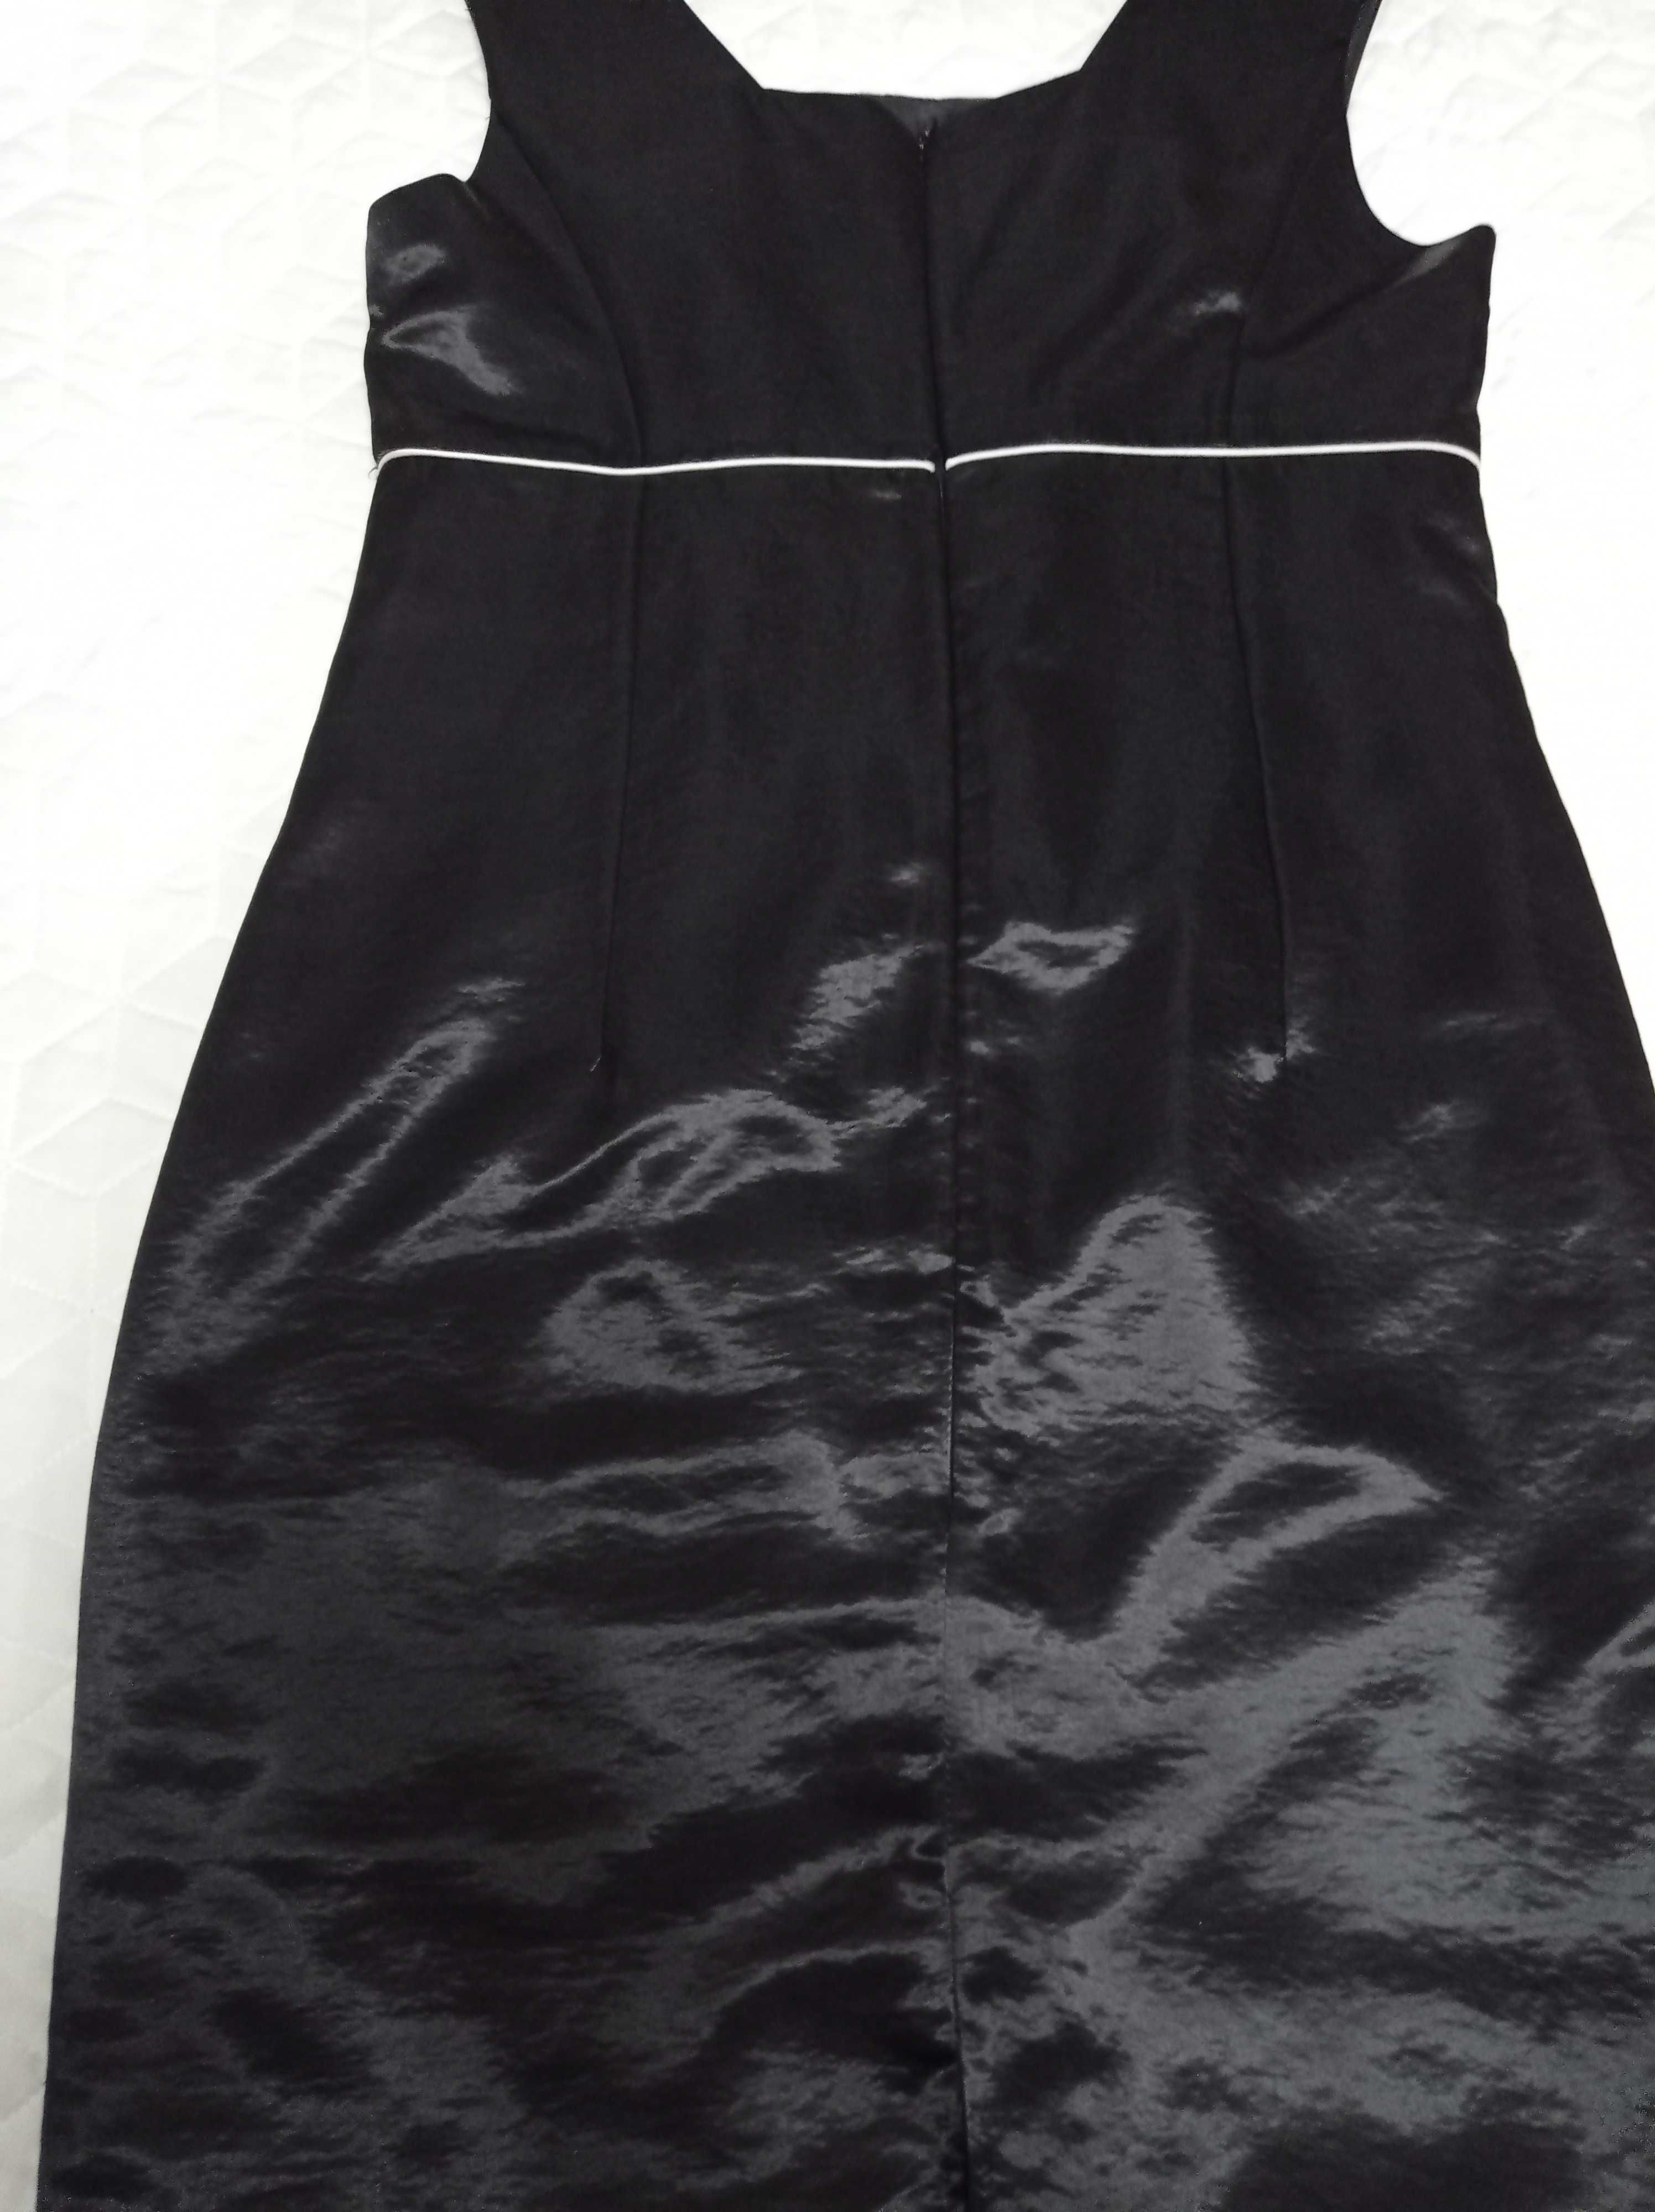 Czarna sukienka rozmiar 40